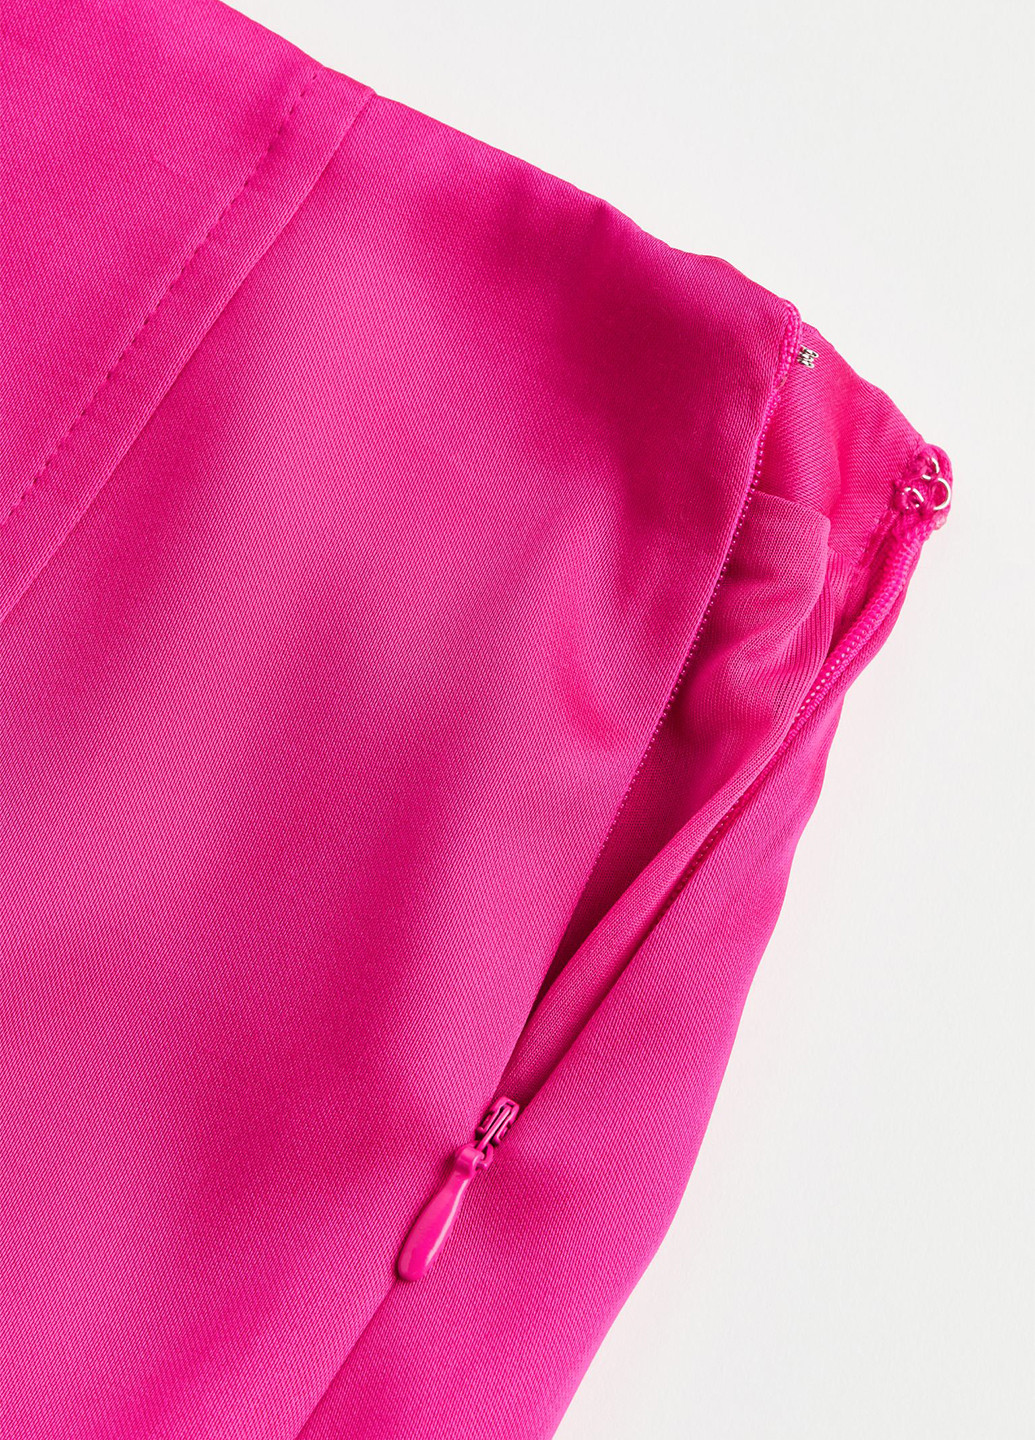 Фуксиновая вечерний однотонная юбка H&M а-силуэта (трапеция)